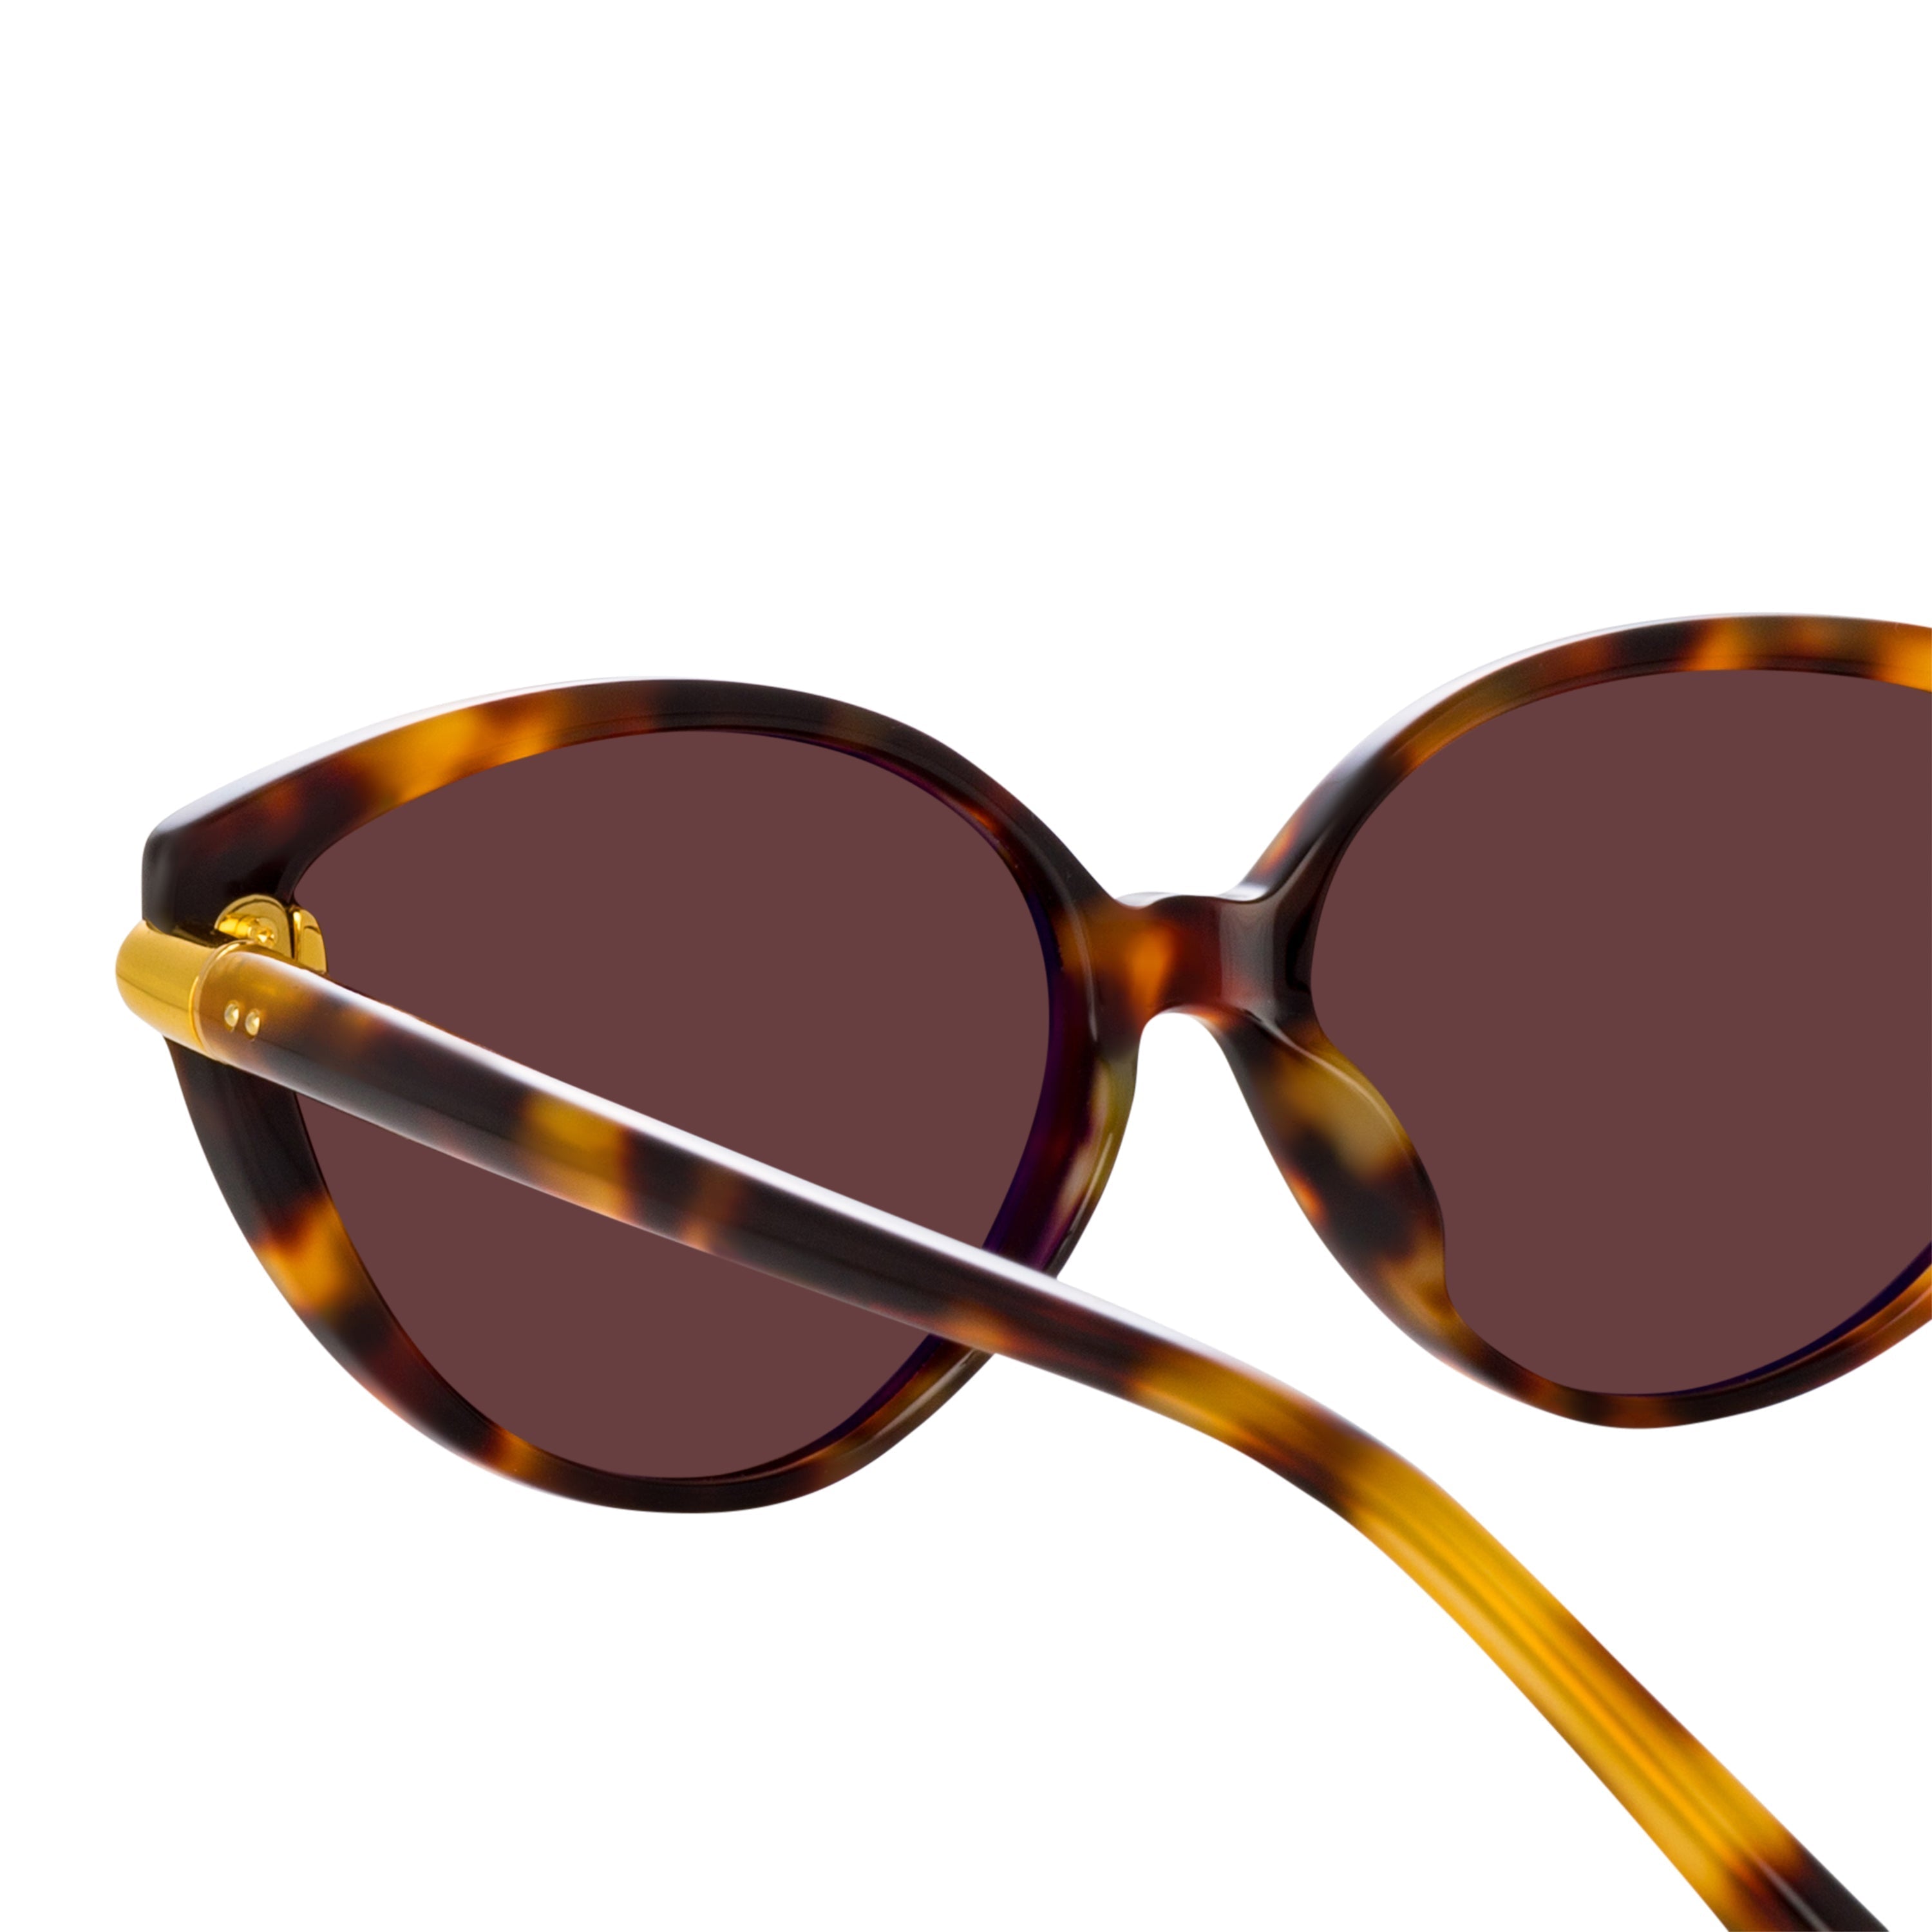 Color_LFL1211C2SUN - Palm Cat Eye Sunglasses in Tortoiseshell